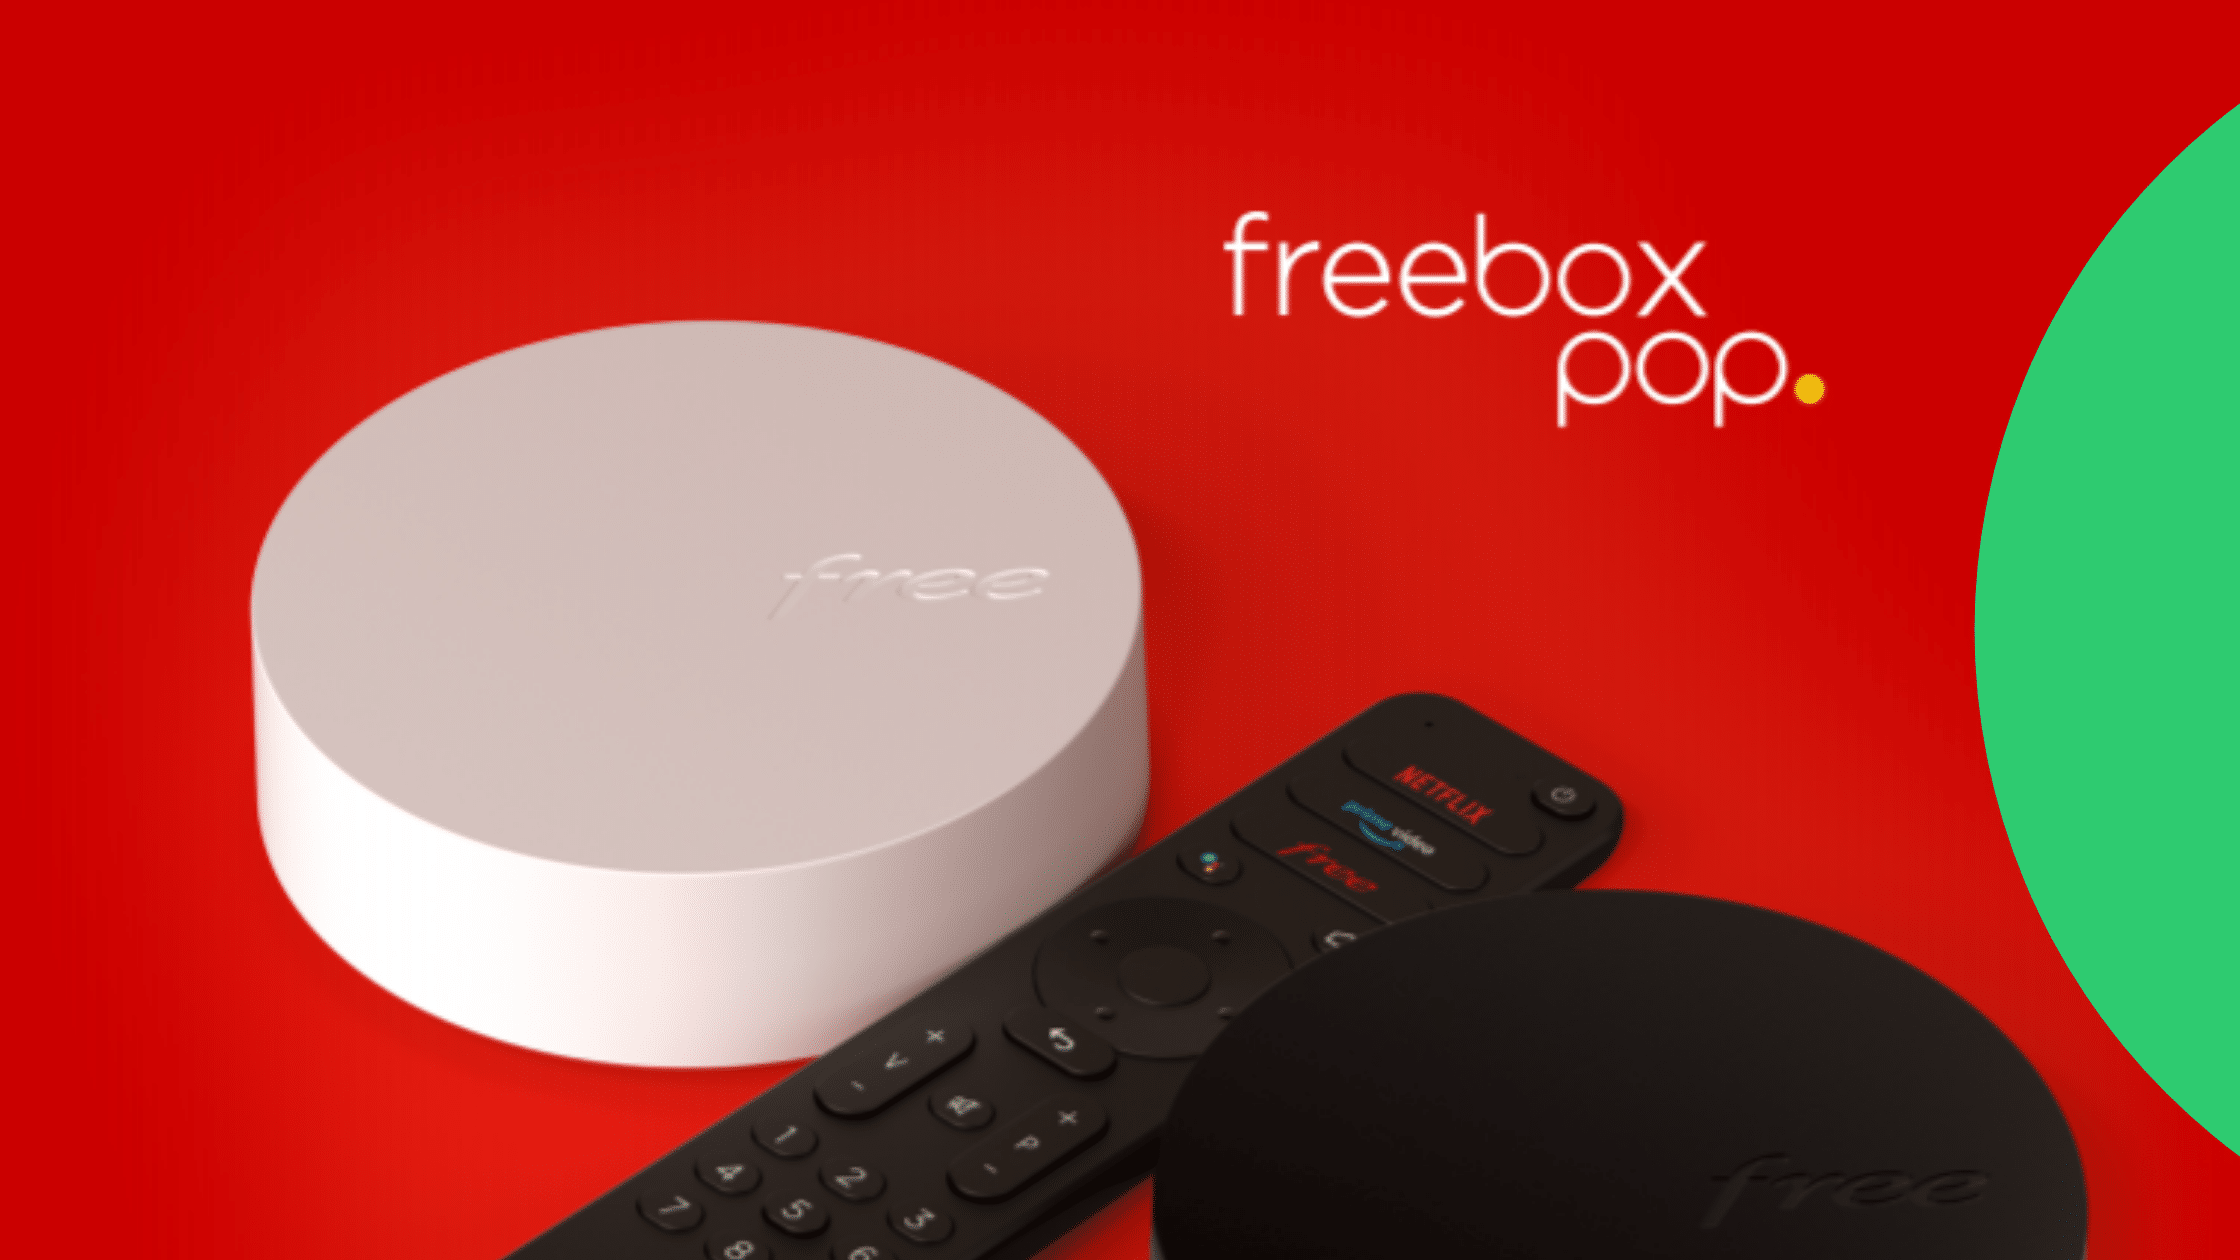 Freebox Pop : la box internet fibre de Free est en ce moment à petit prix